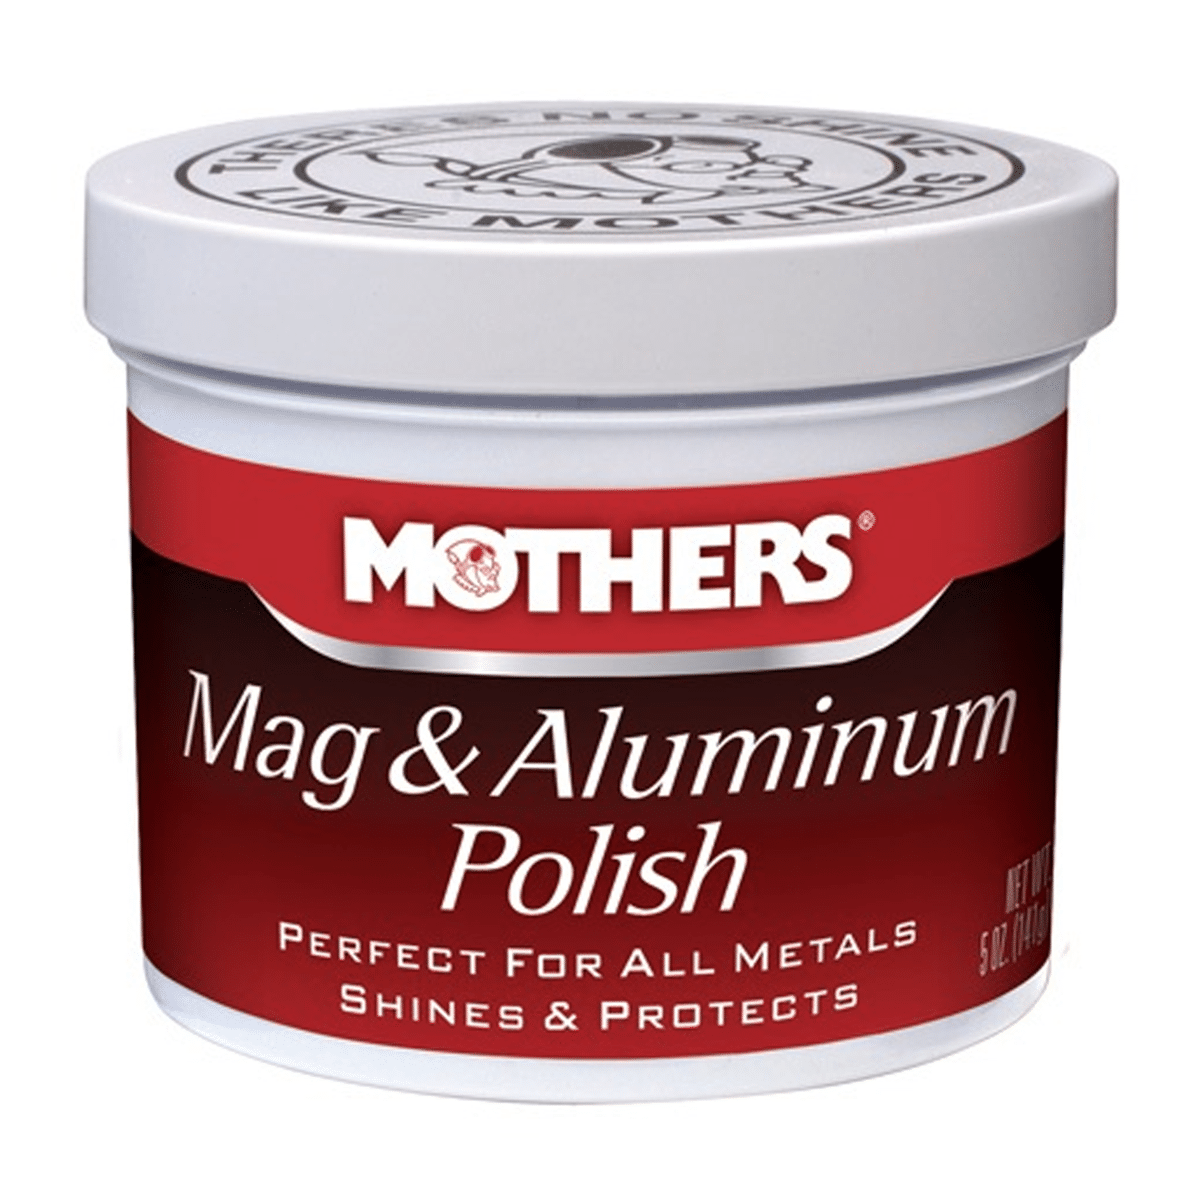 MOTHERS Mag & Aluminum Polish 141g Pasta do Polerowania Metalu